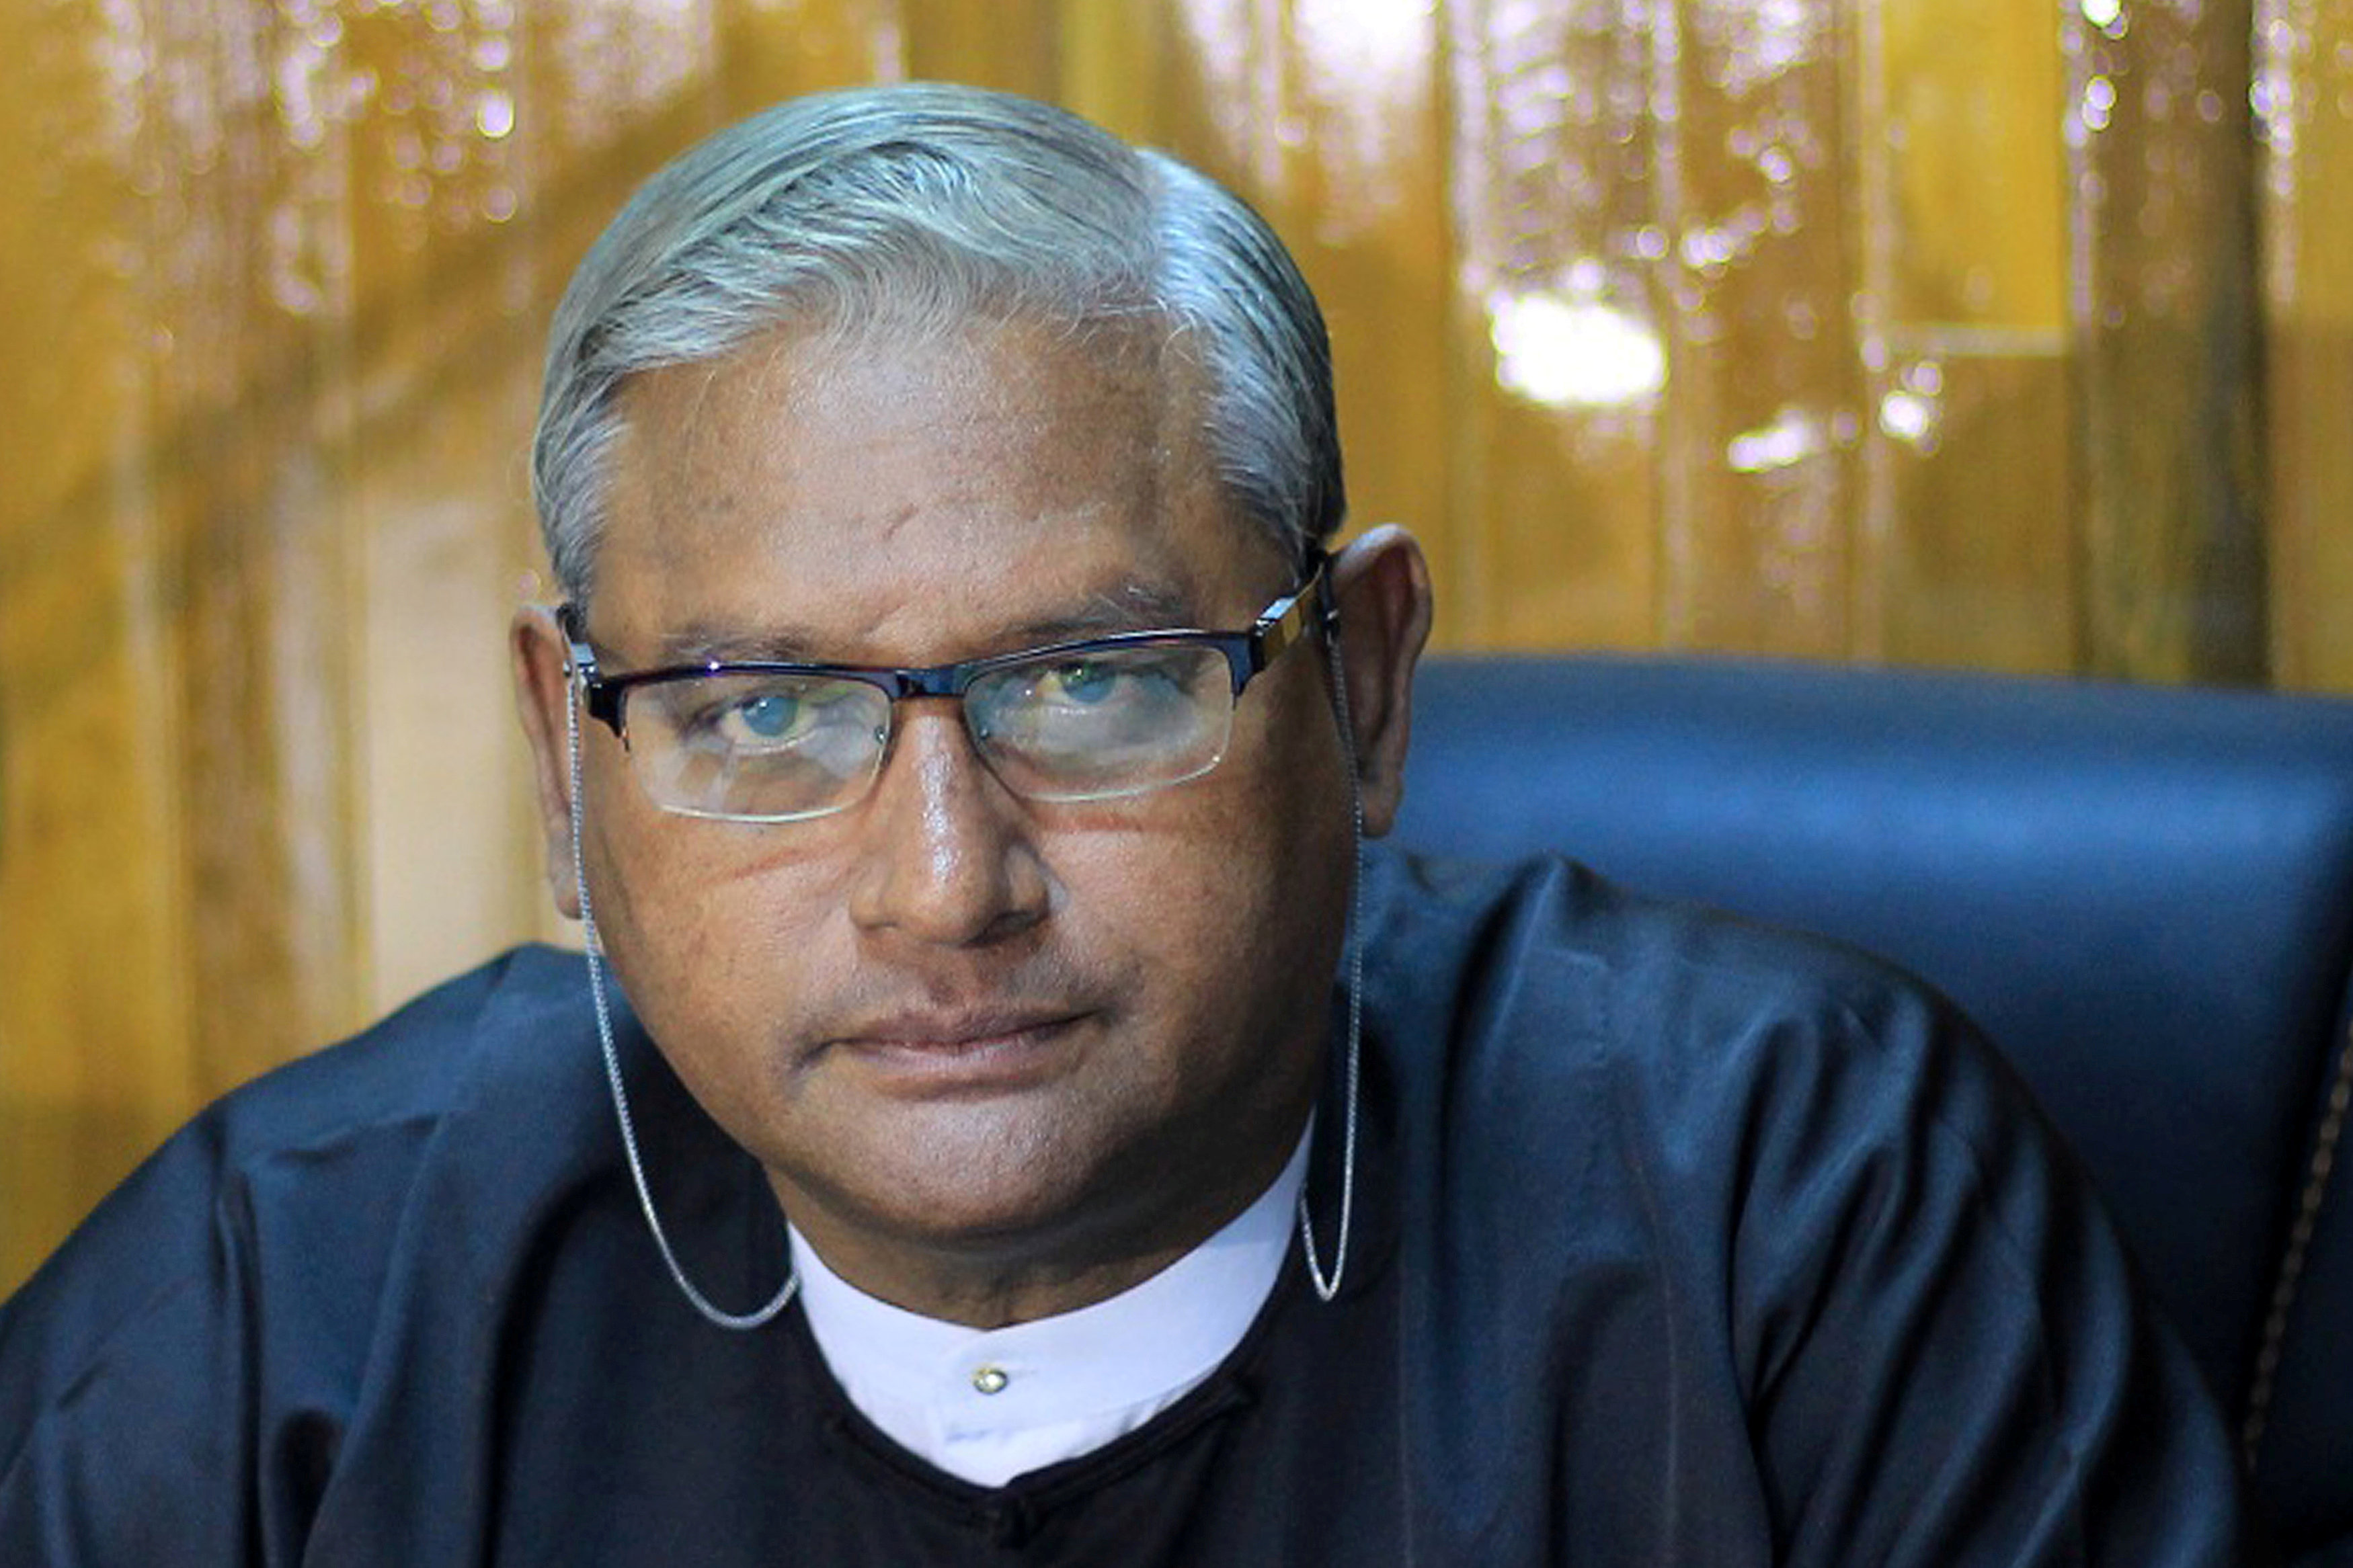 Surveillance and threats – Slain Myanmar lawyer felt ‘targeted’